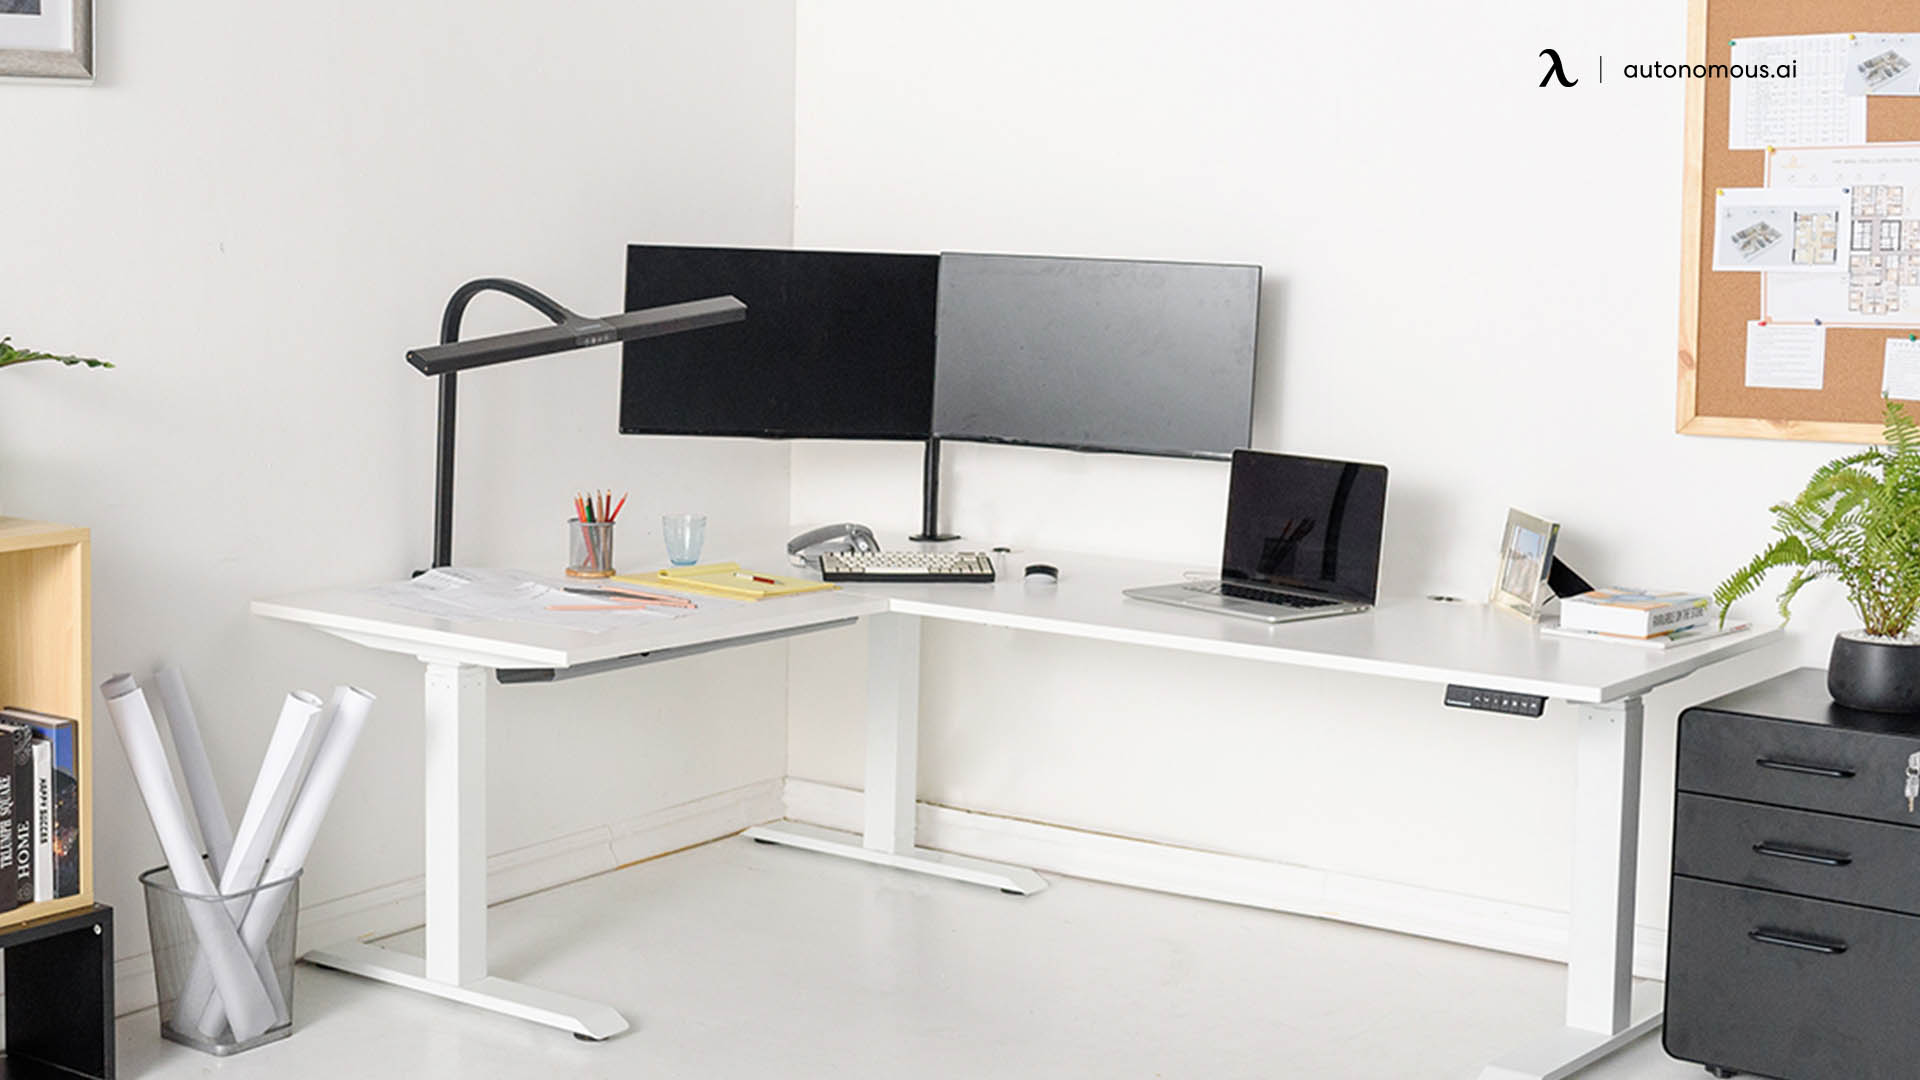 SmartDesk corner desk accessories for women